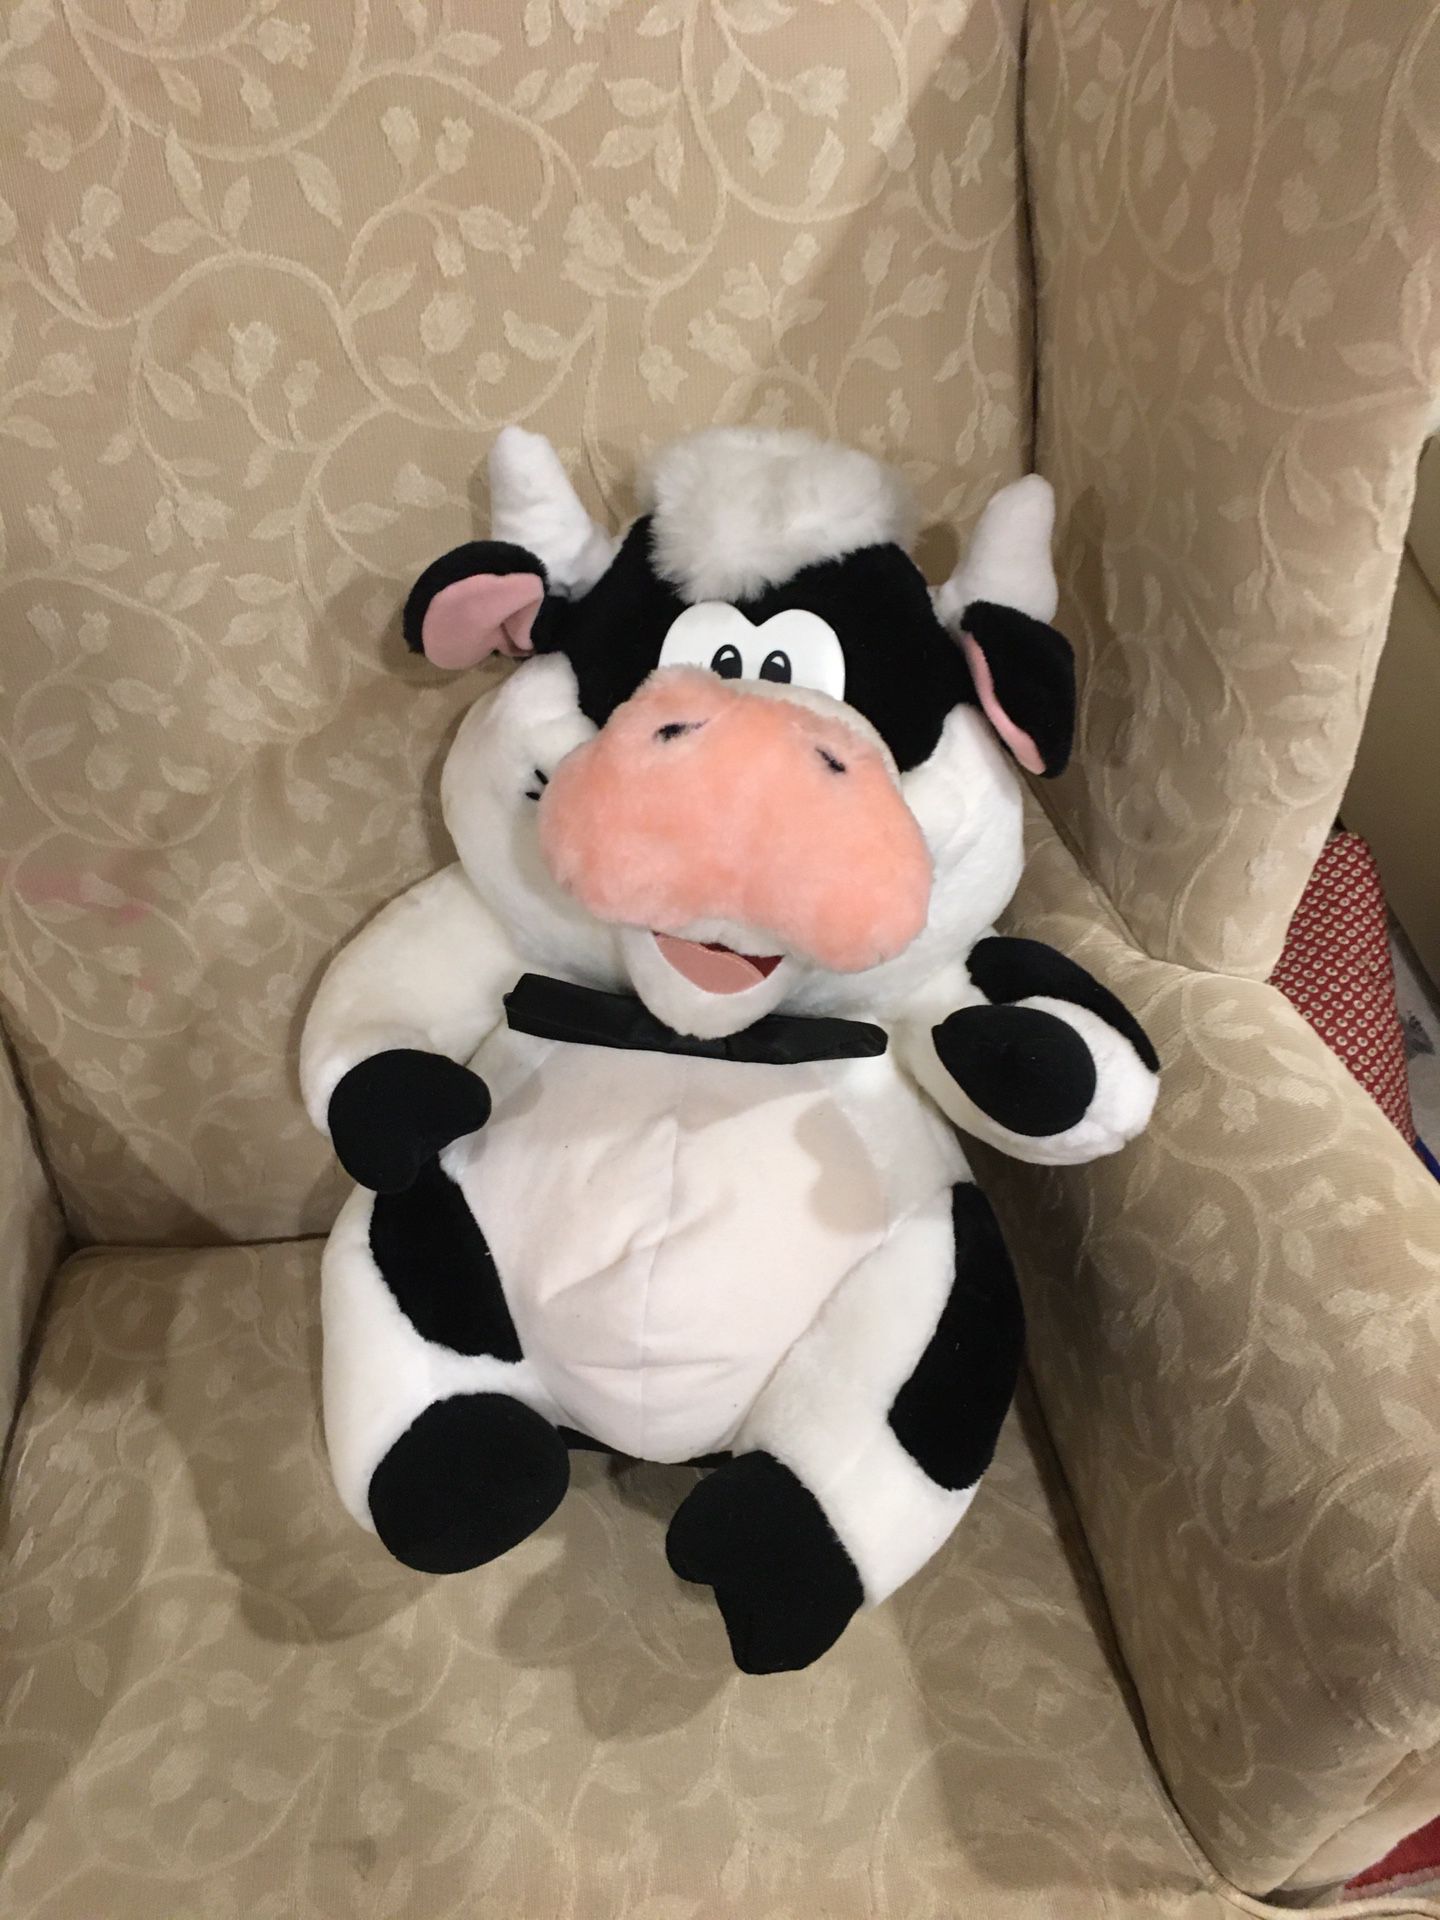 Large cow stuffed animal